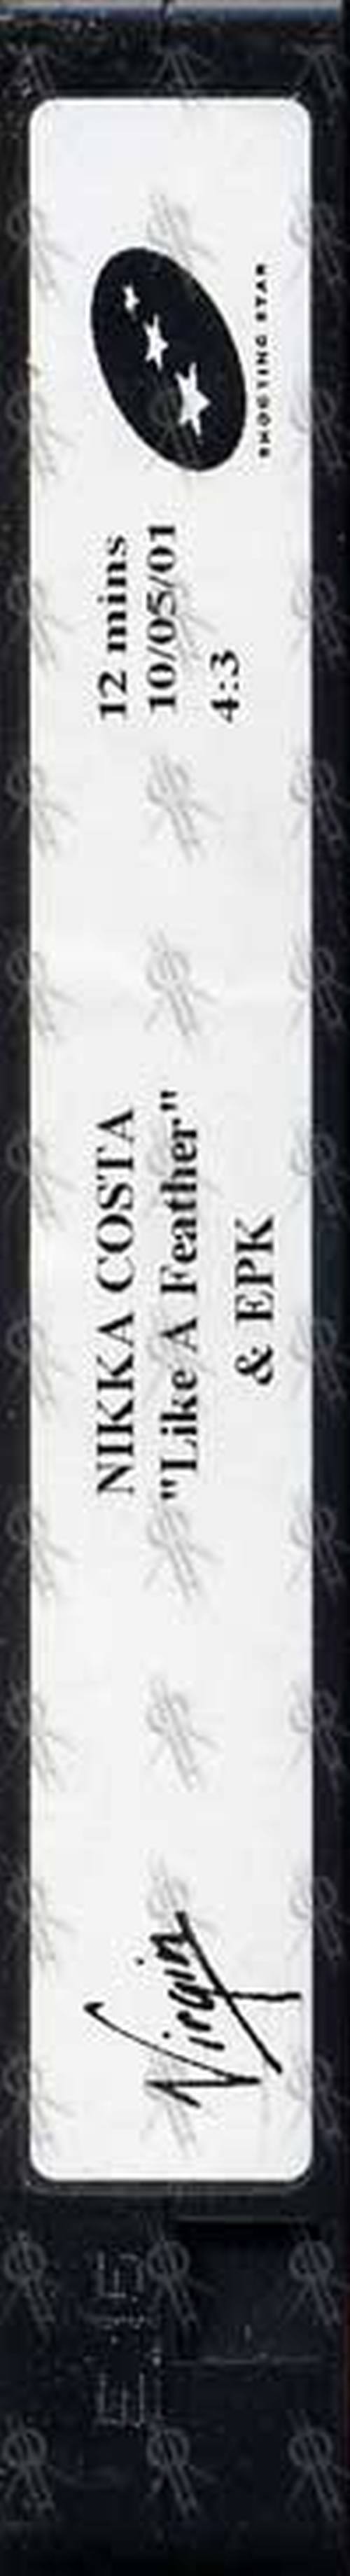 COSTA-- NIKKA - Like A Feather + EPK - 1